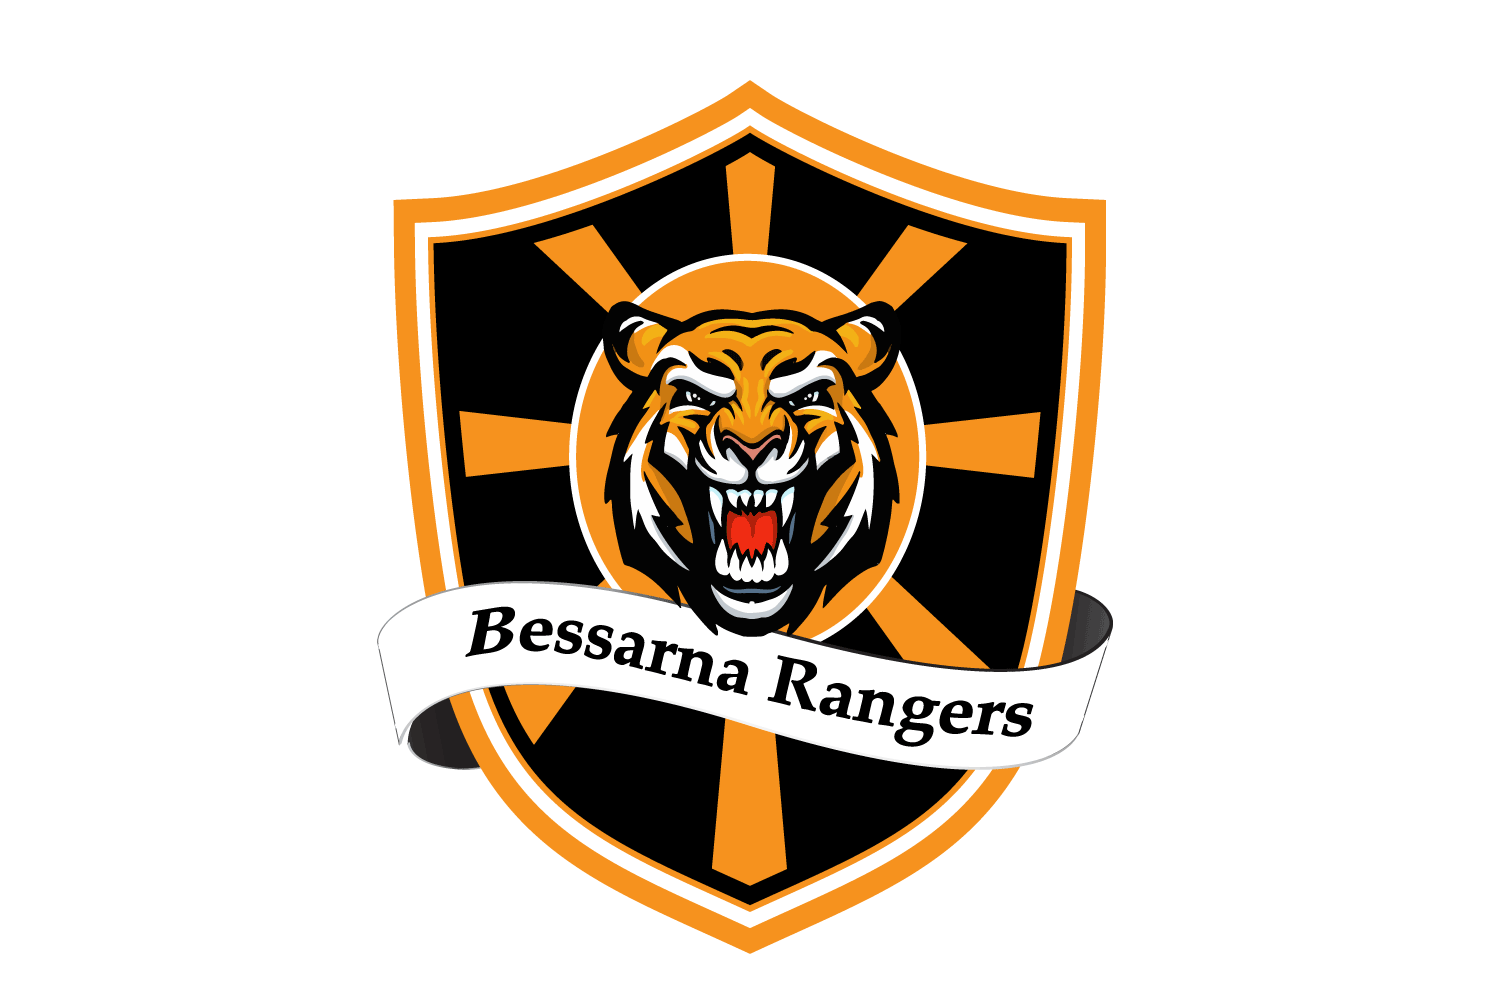 The Bessarna Club-logo